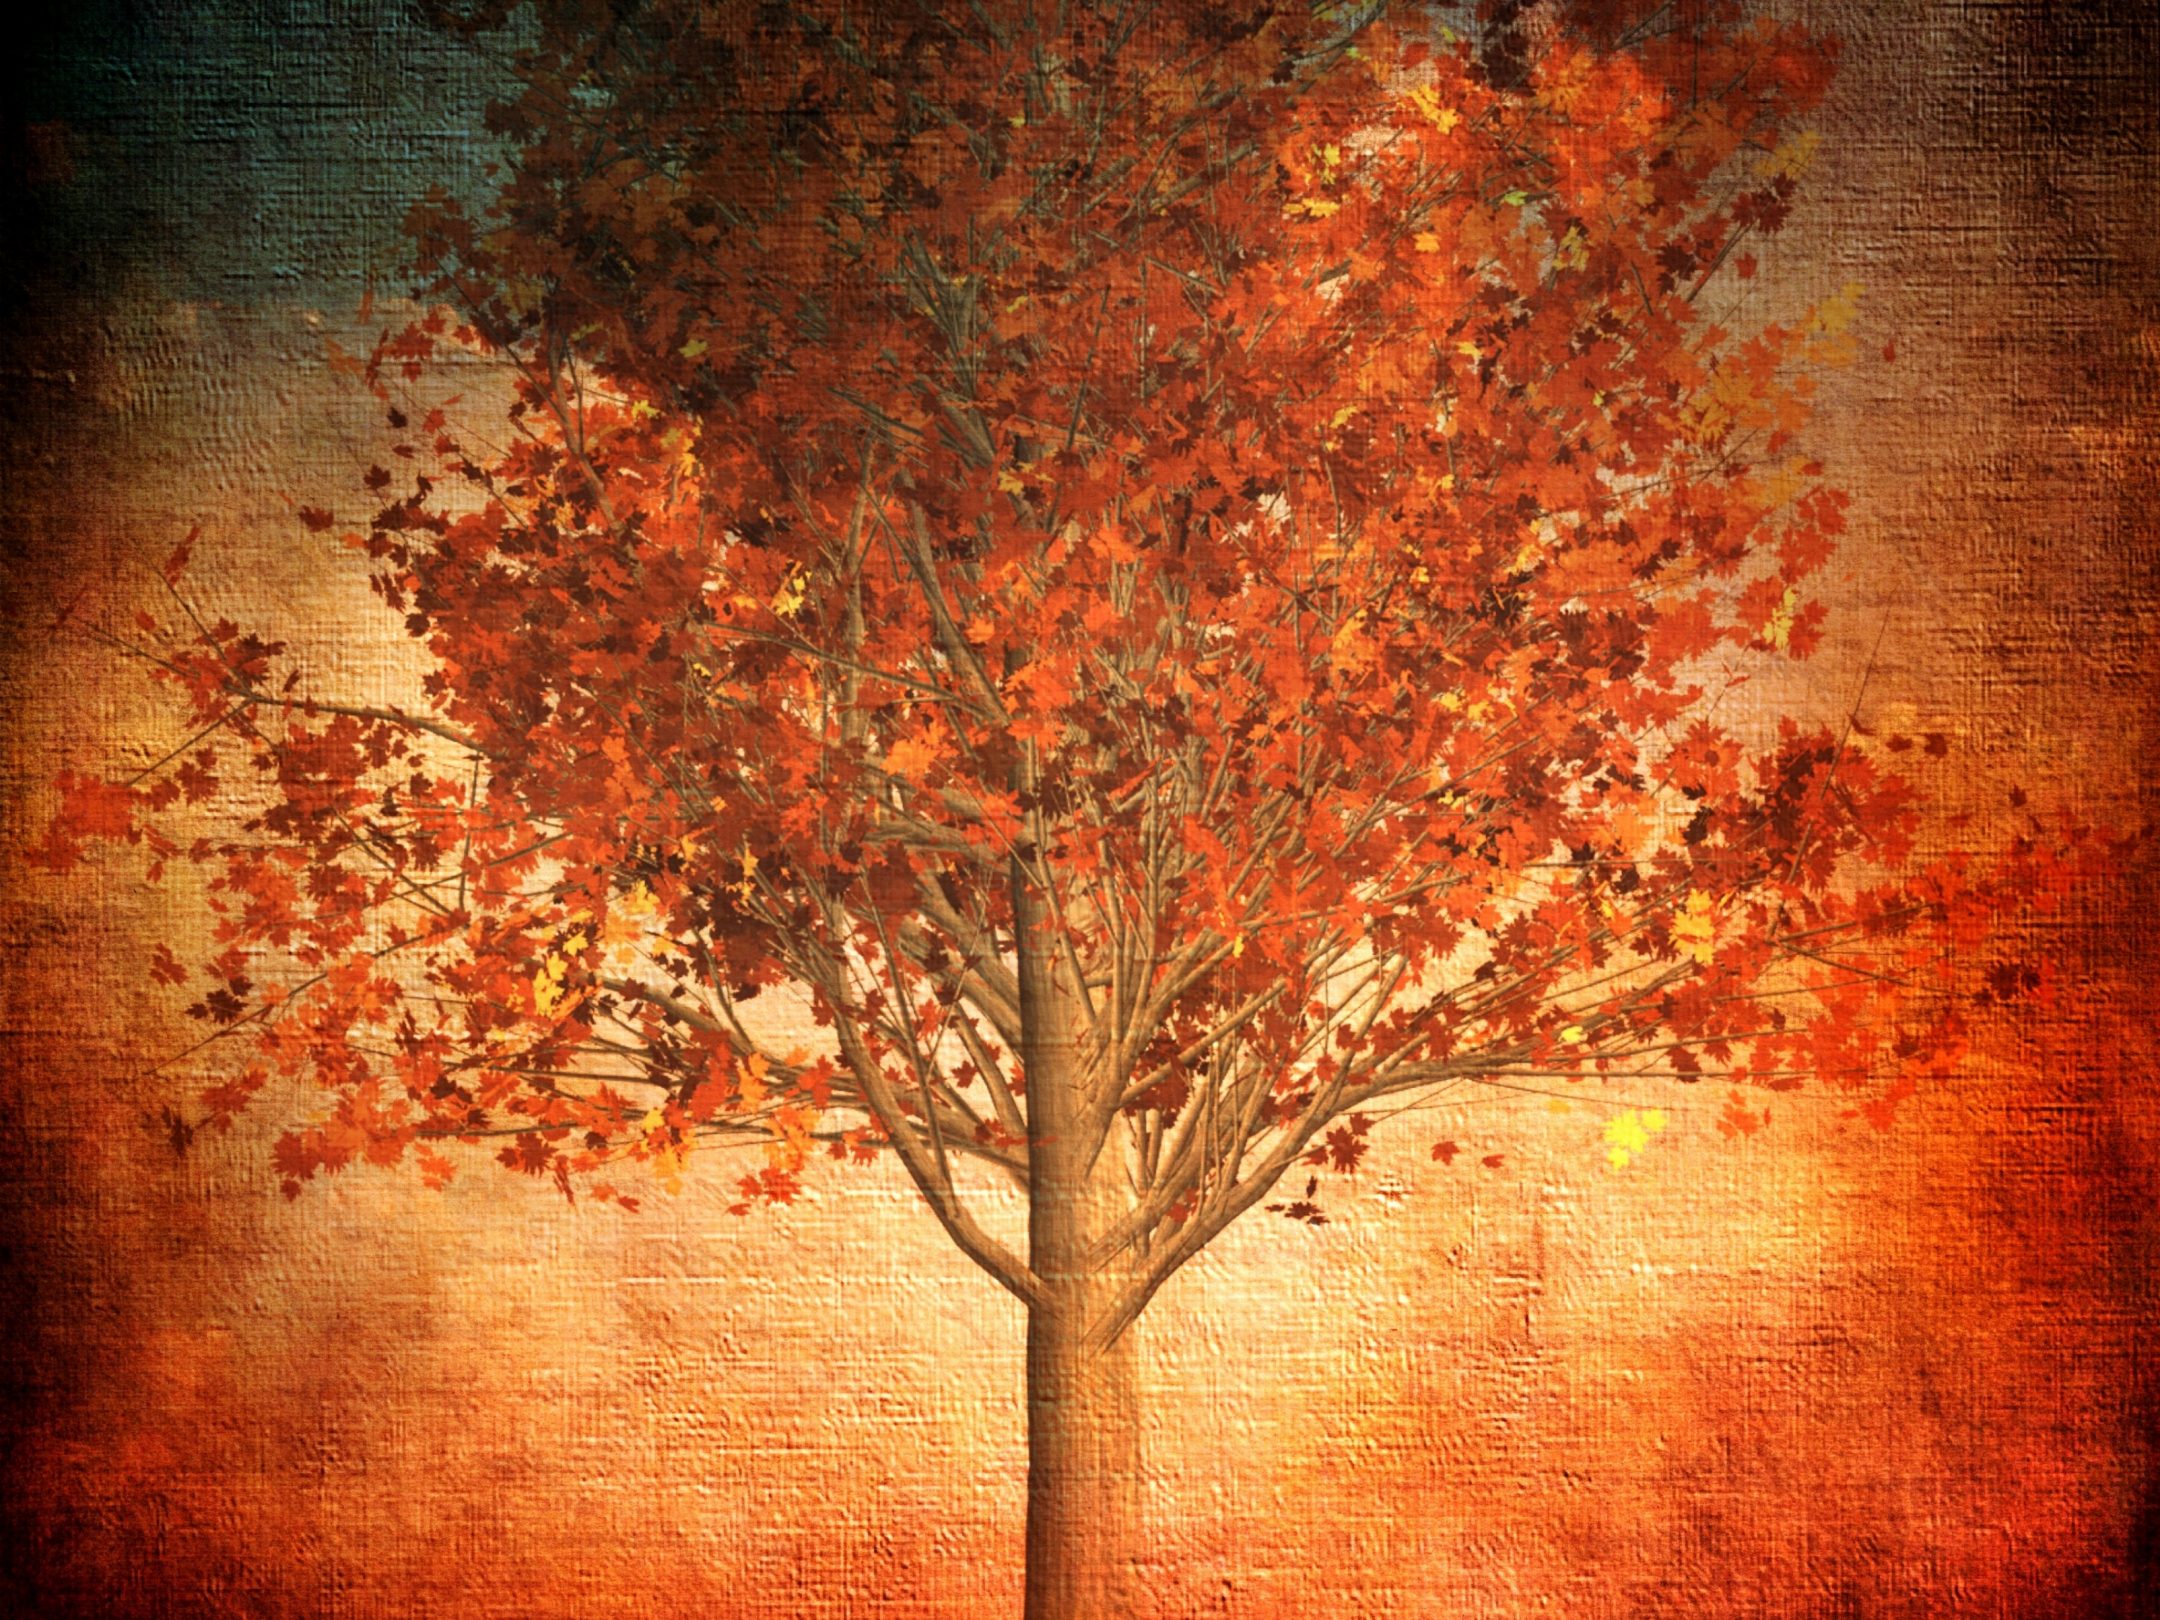 2160x1620 iPad wallpaper 4k Aesthetic Autumn Red Fall Leaves Nature iPad Wallpaper 2160x1620 pixels resolution